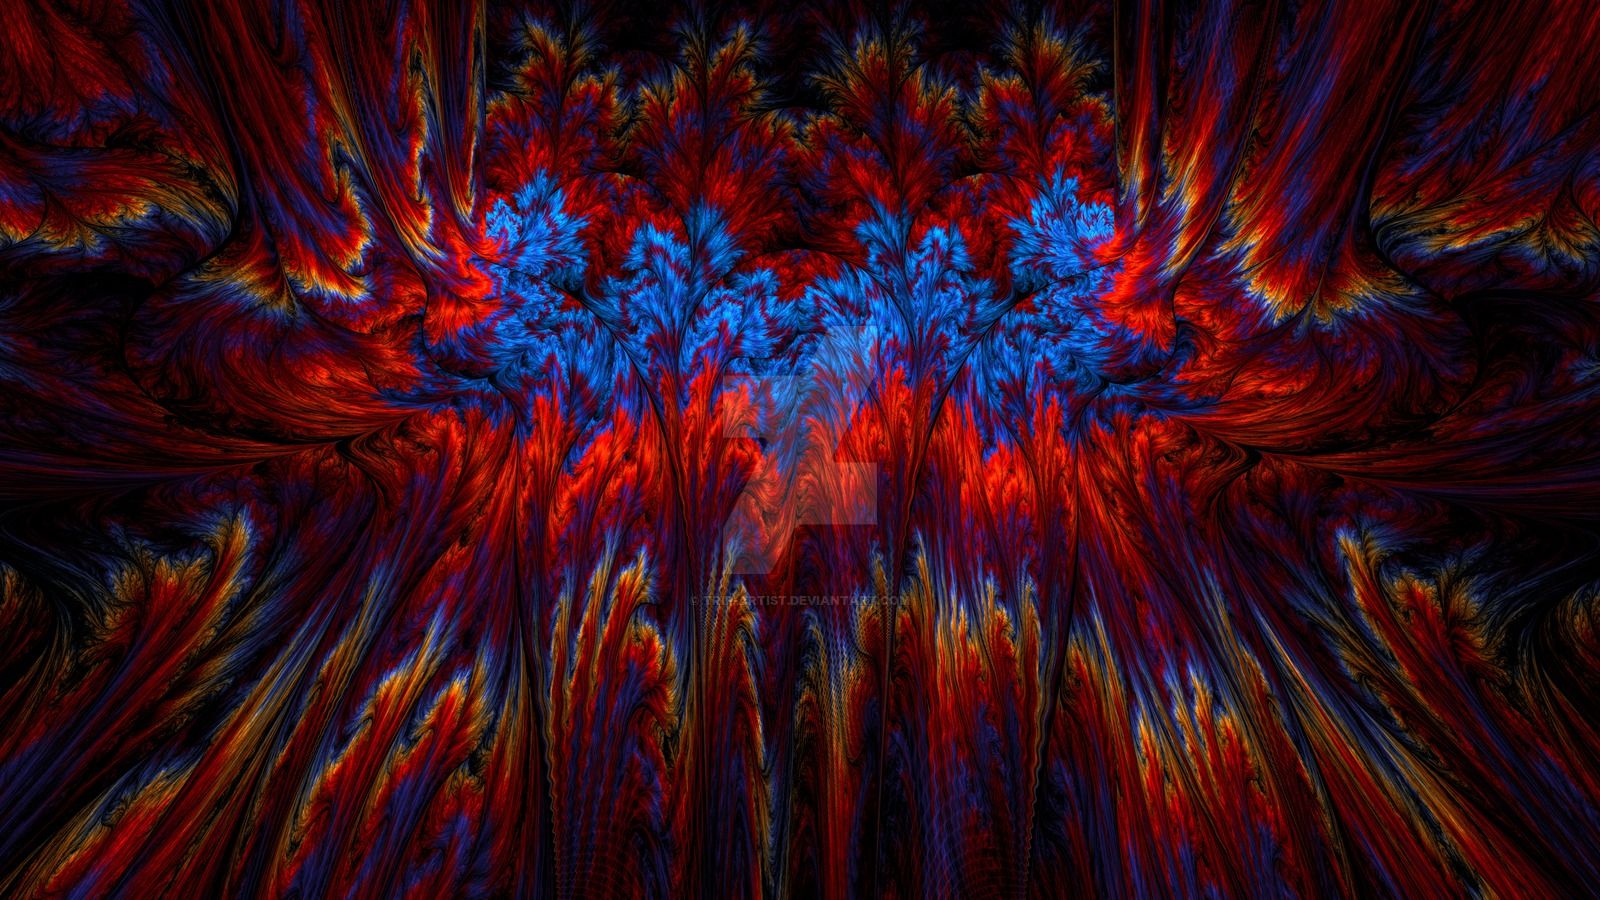 Psychedelic Spectra - HD Wallpaper by Trip Artist on DeviantArt